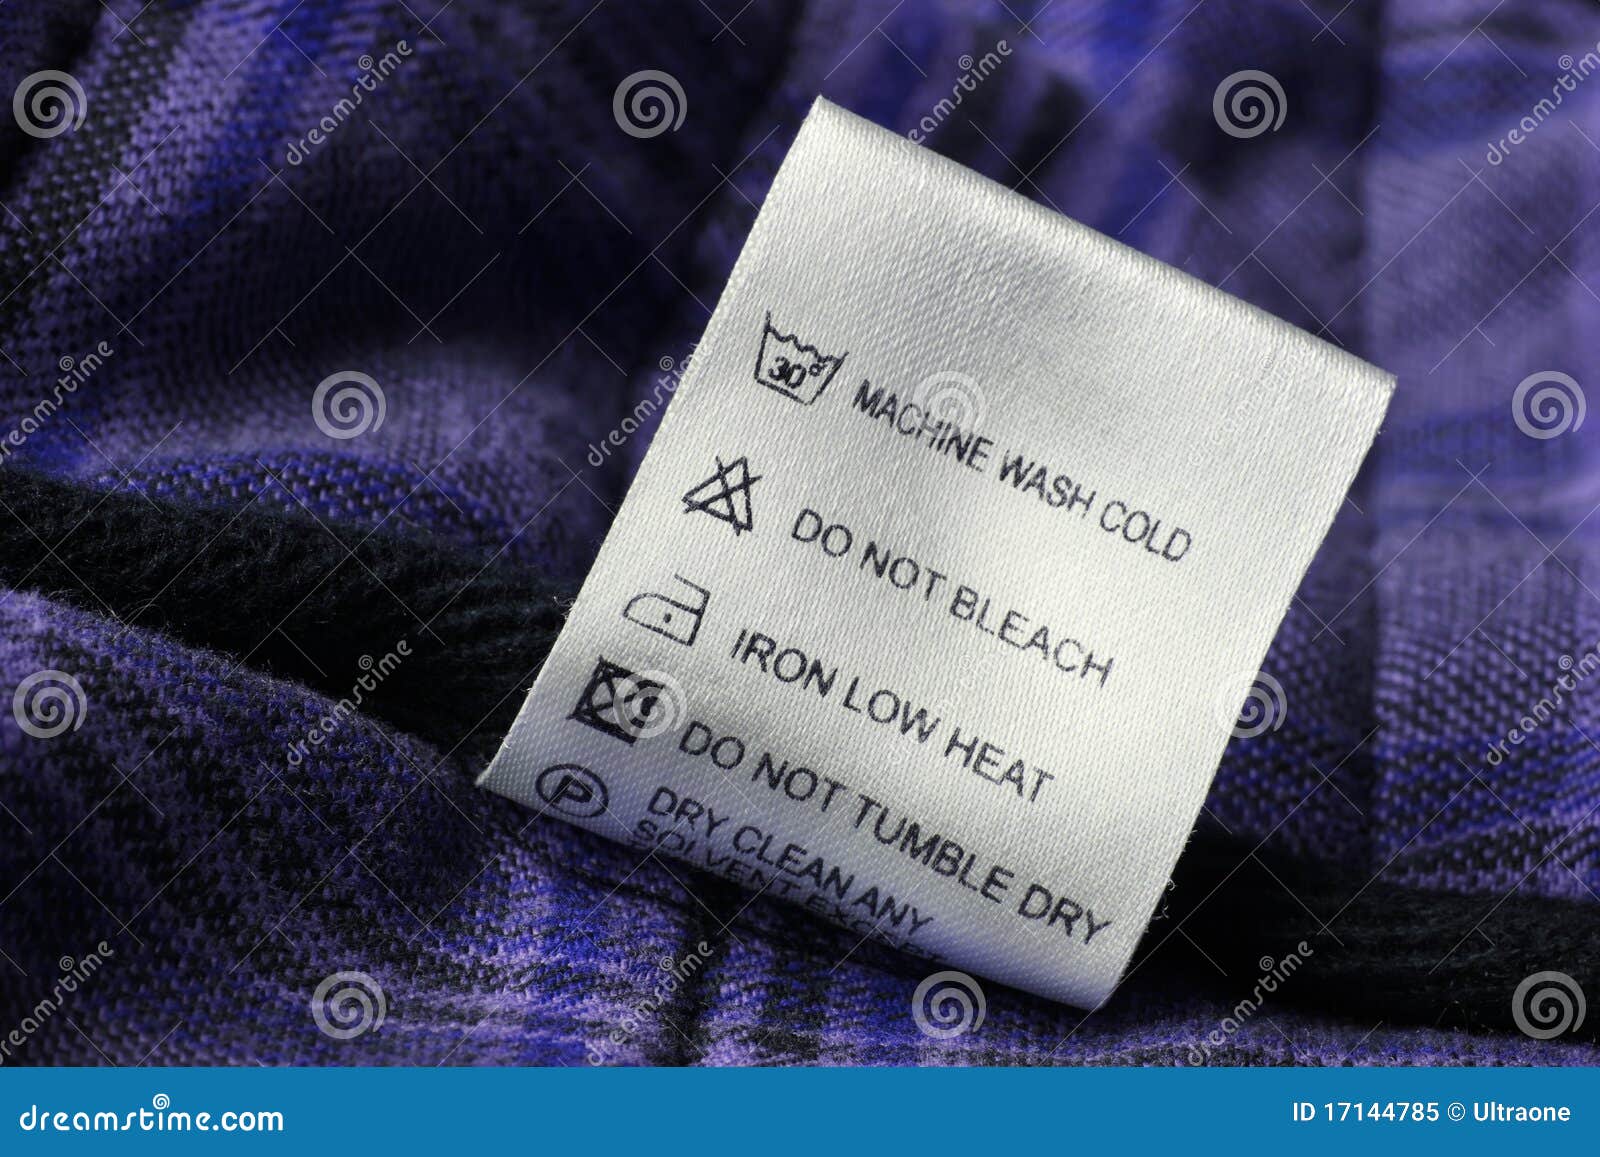 Laundry Care Label on Scotch Textile Background Stock Image - Image of ...